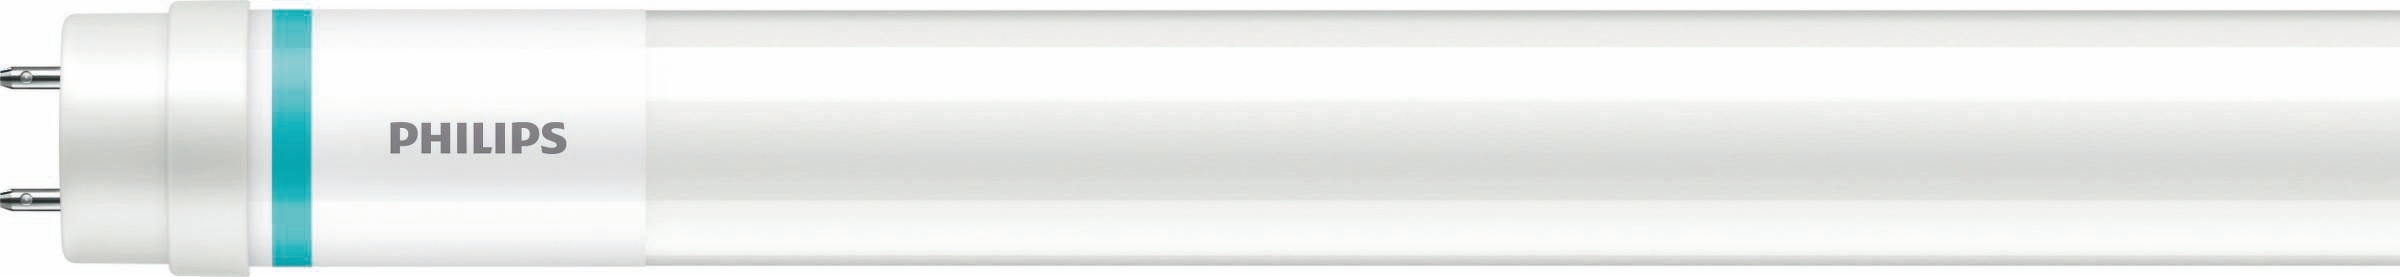 Philips 64691200 MASTER Value LEDtube T8 KVG/VVG/230V 1500 mm, 190 °, 20,5 W, 830, 2900 lm, G13, nicht dimmbar